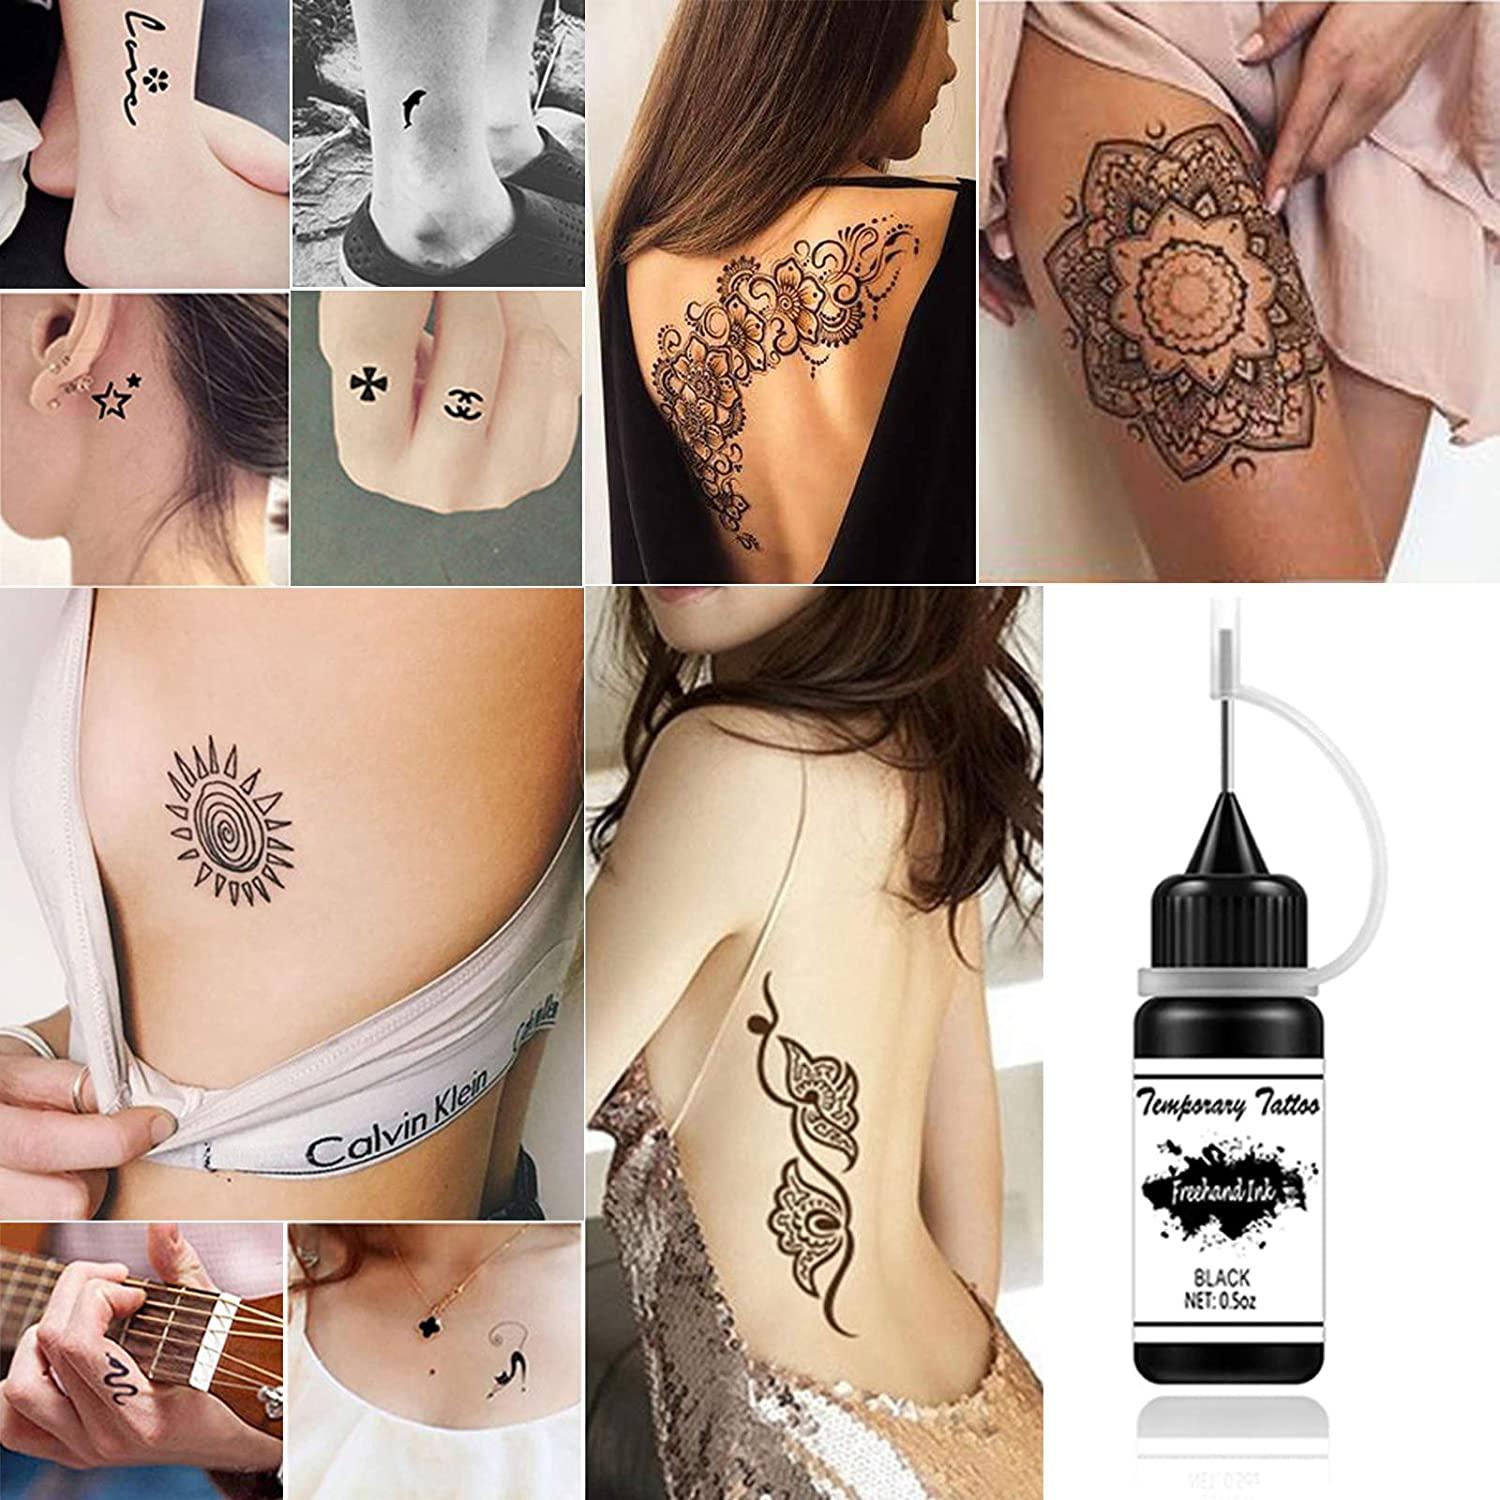 Be Free Manifestation Tattoo - Power Pack | 10 Tattoos $20 (Save 20%) |  Freedom tattoos, Tasteful tattoos, Fake tattoos